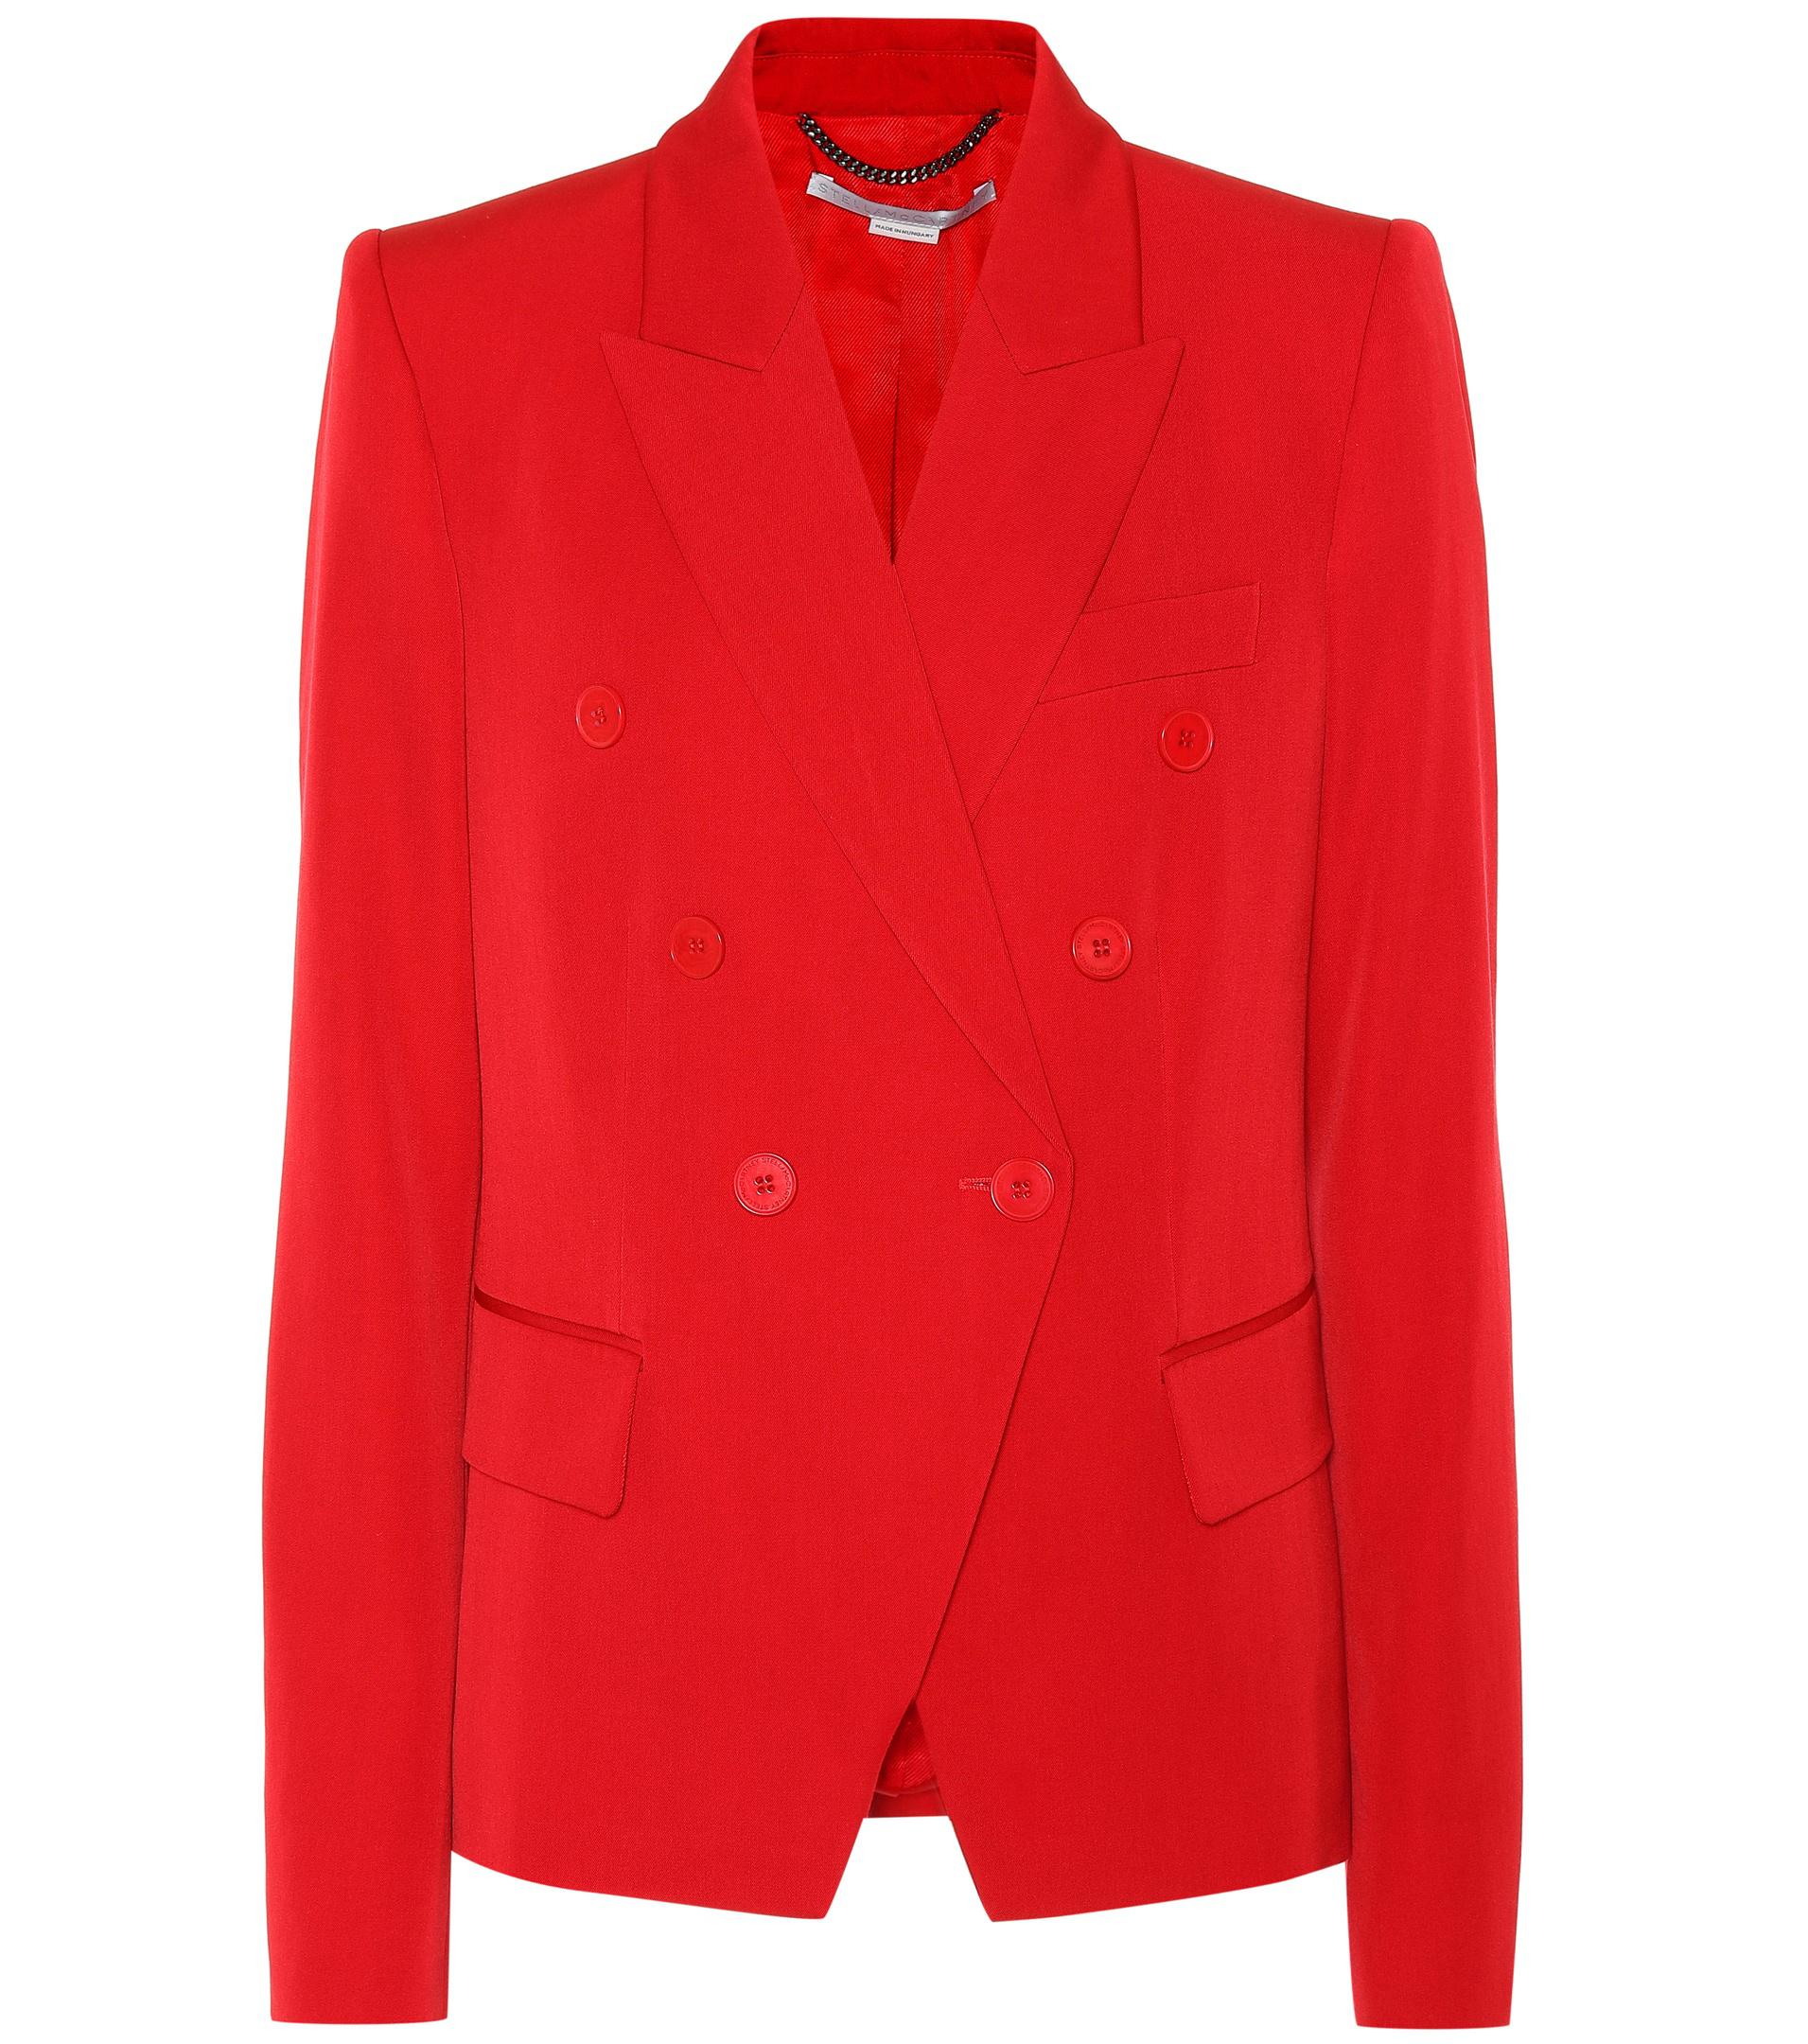 Stella McCartney Wool Blazer in Red - Lyst